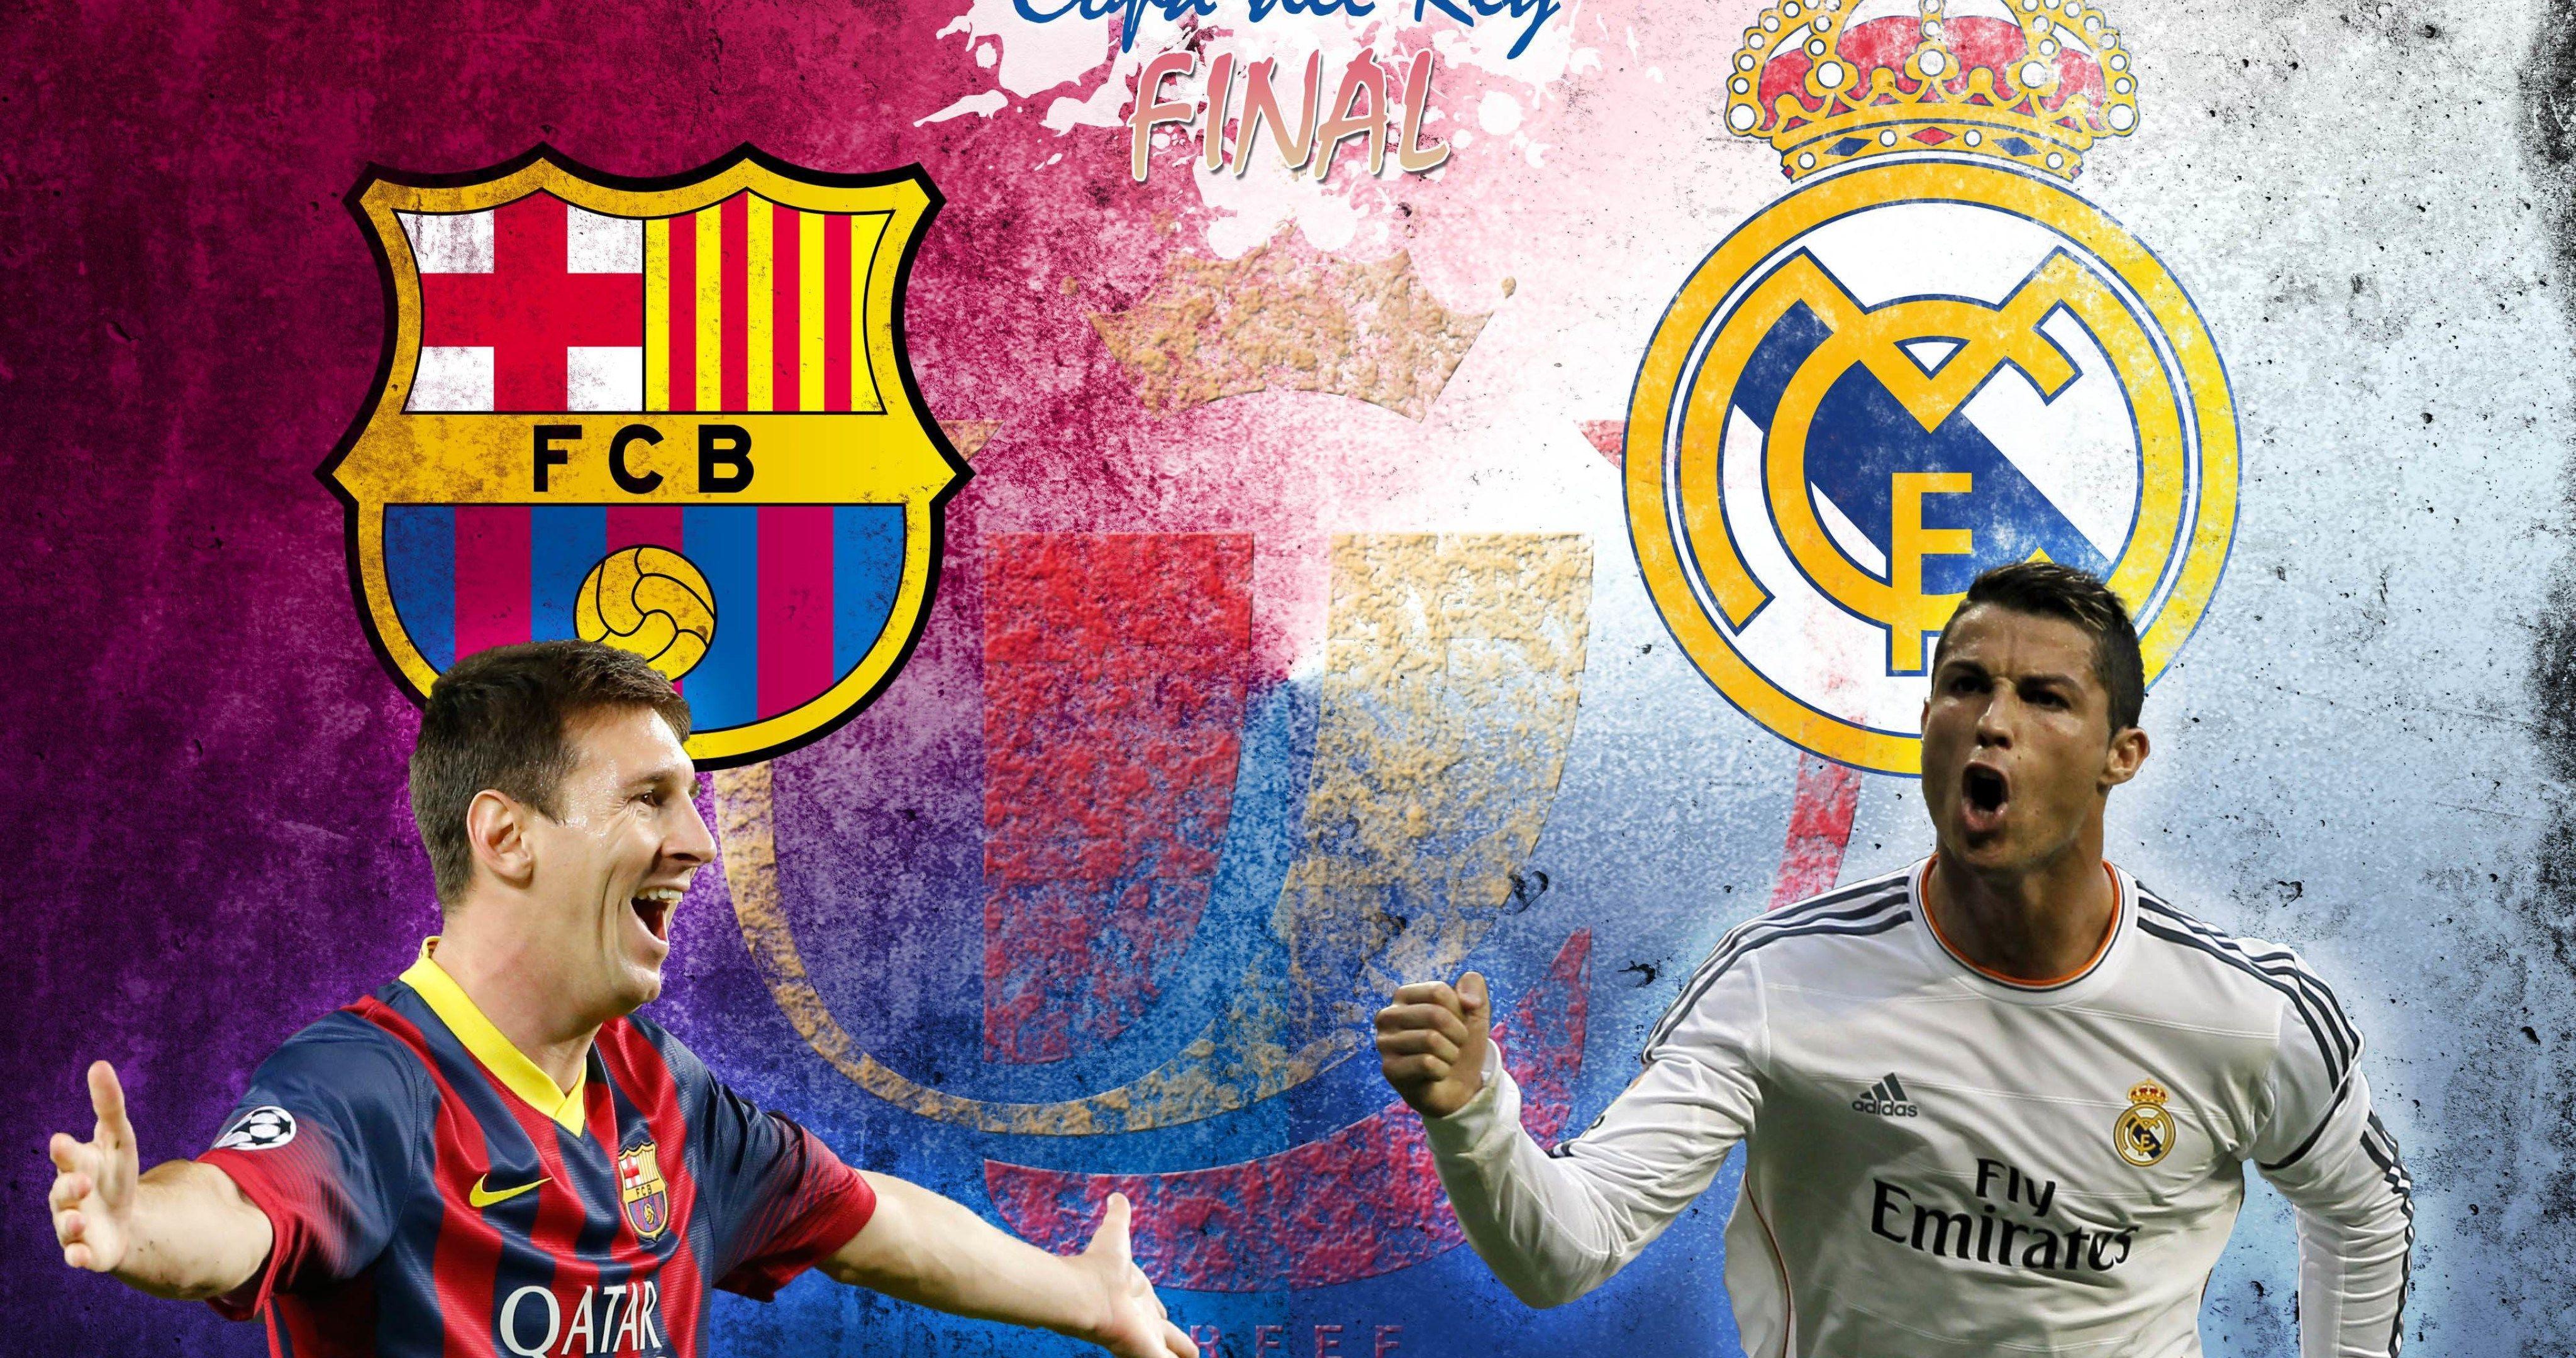 Messi and Ronaldo 4K wallpapers.jpg